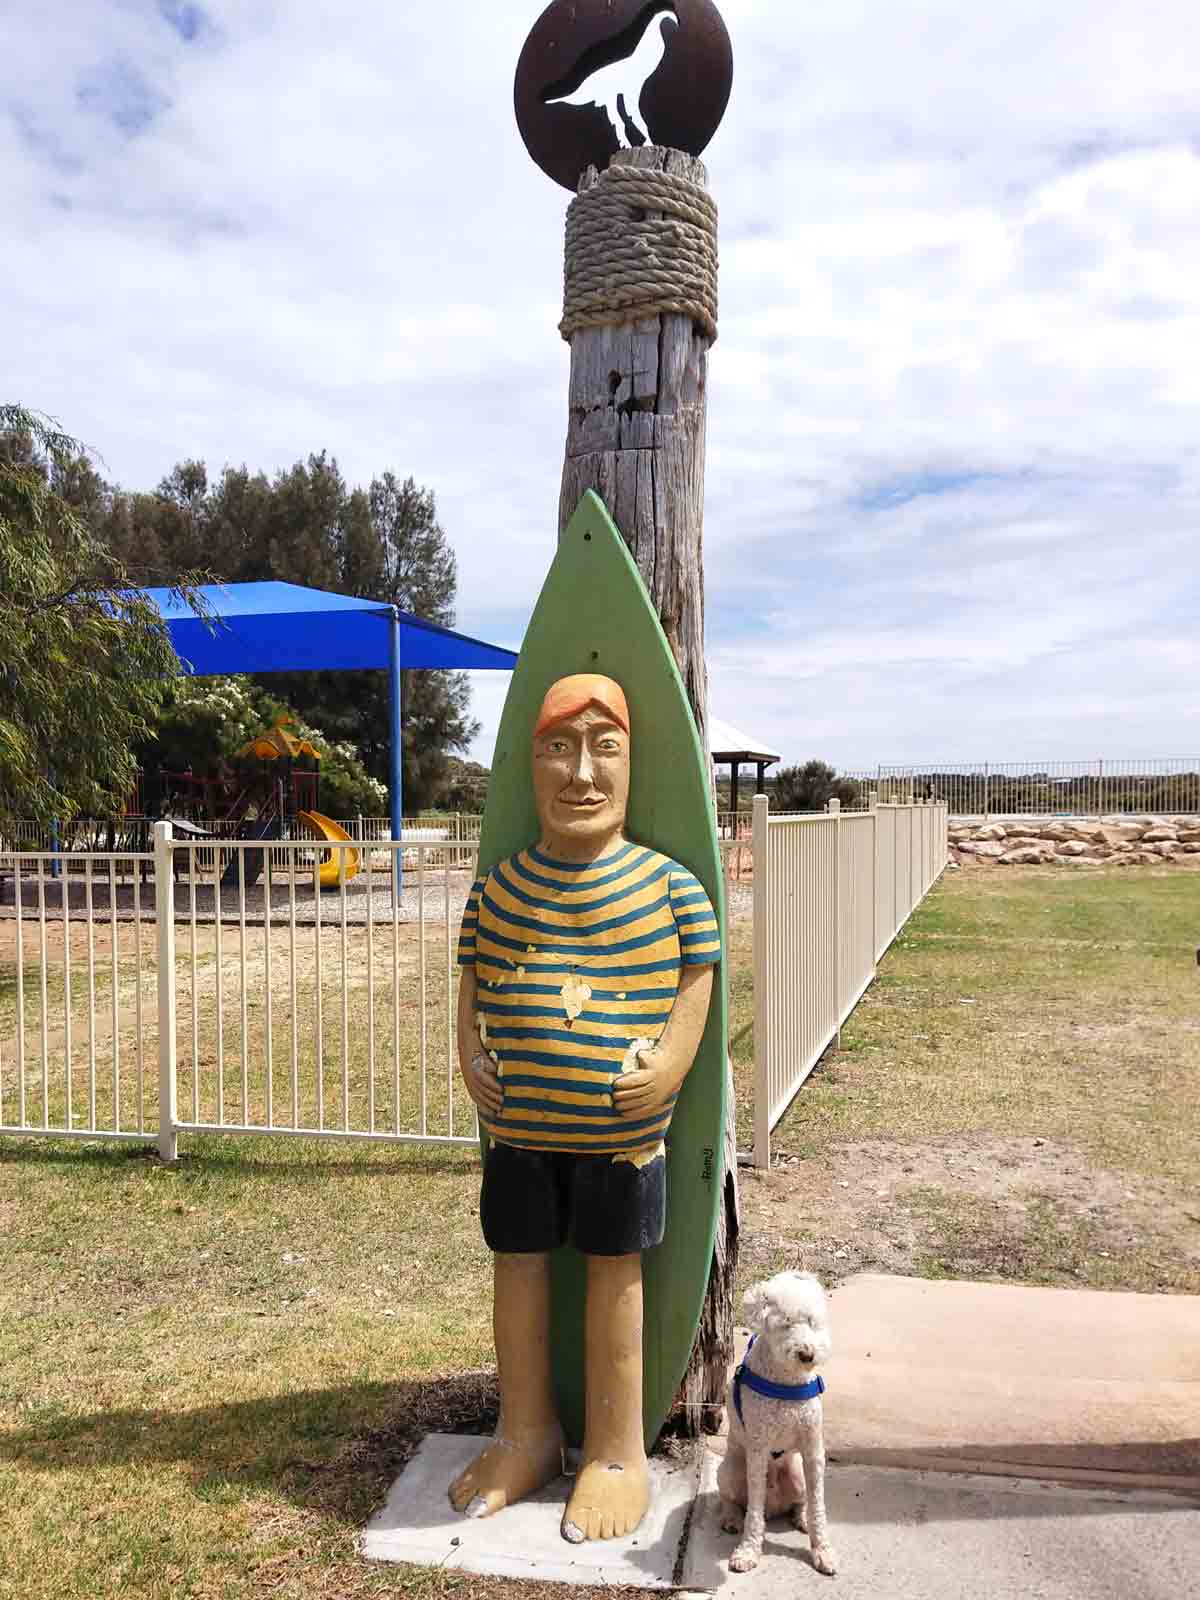 Vintage surfer sculpture. Located in Elliston, Eyre Peninsula, South Australia.